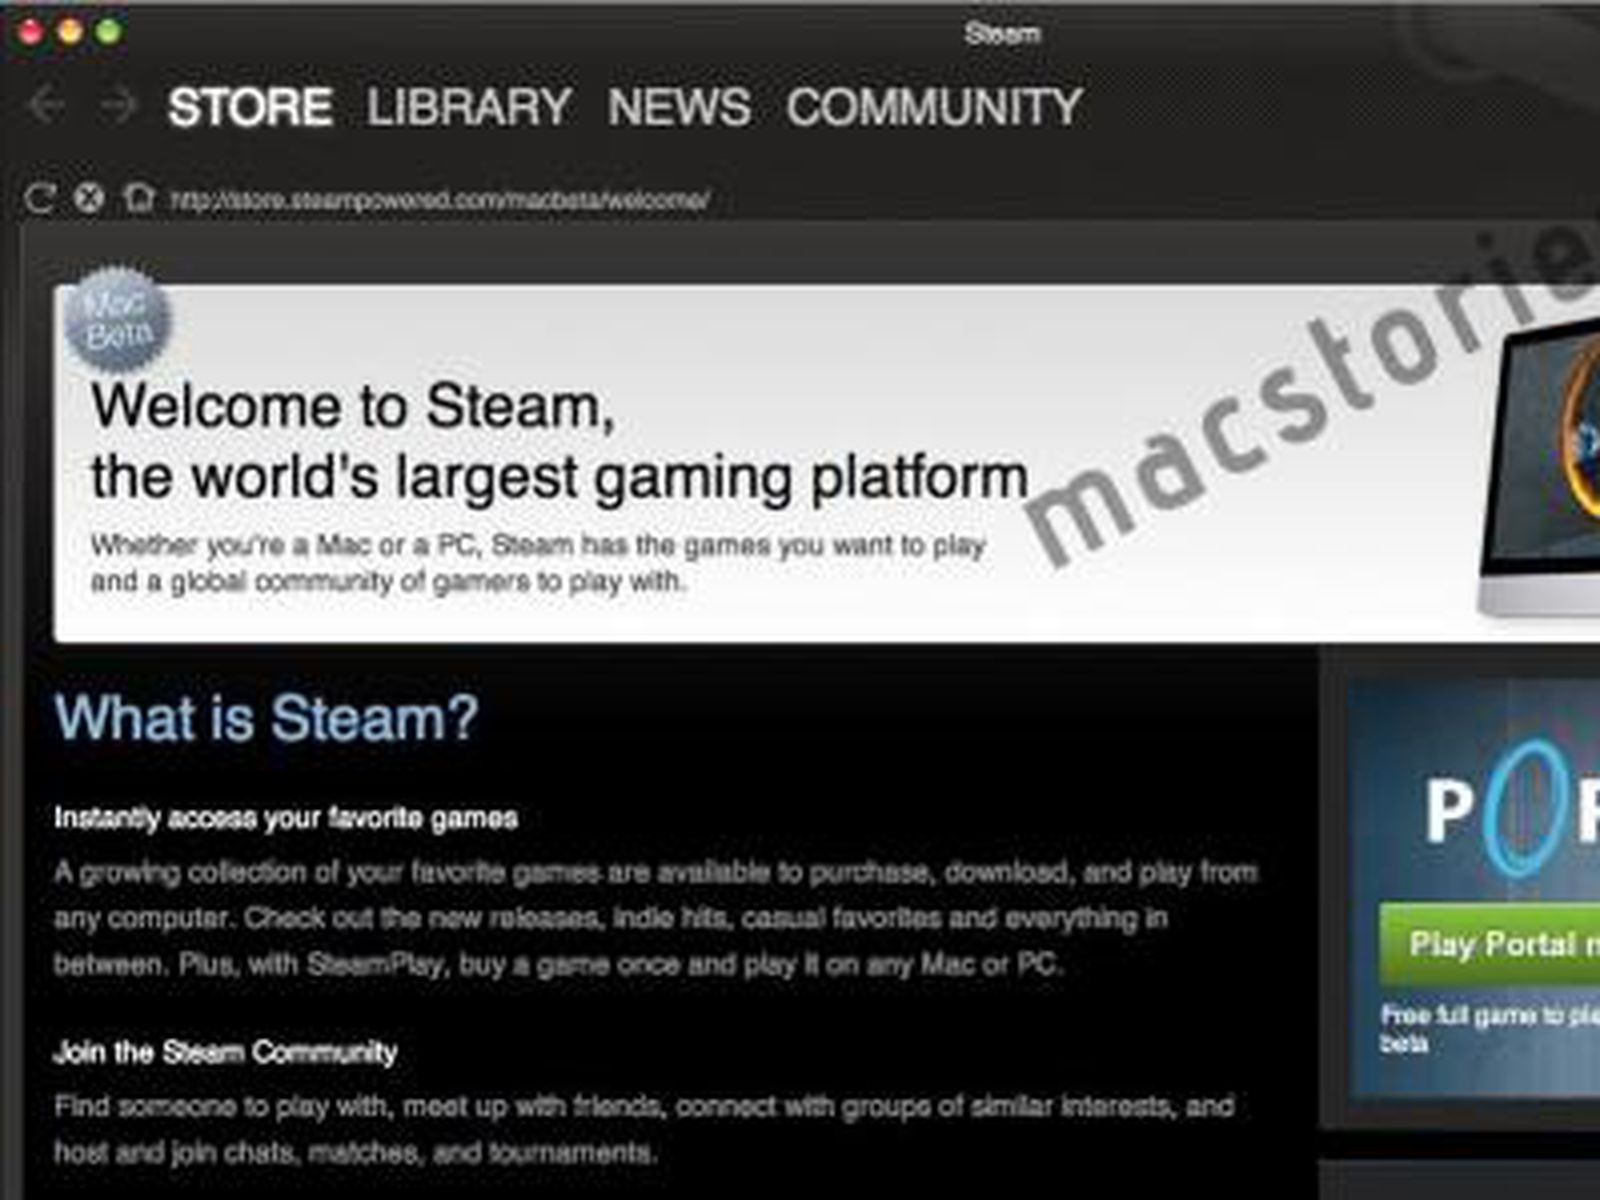 Steam Community :: Polus.gg